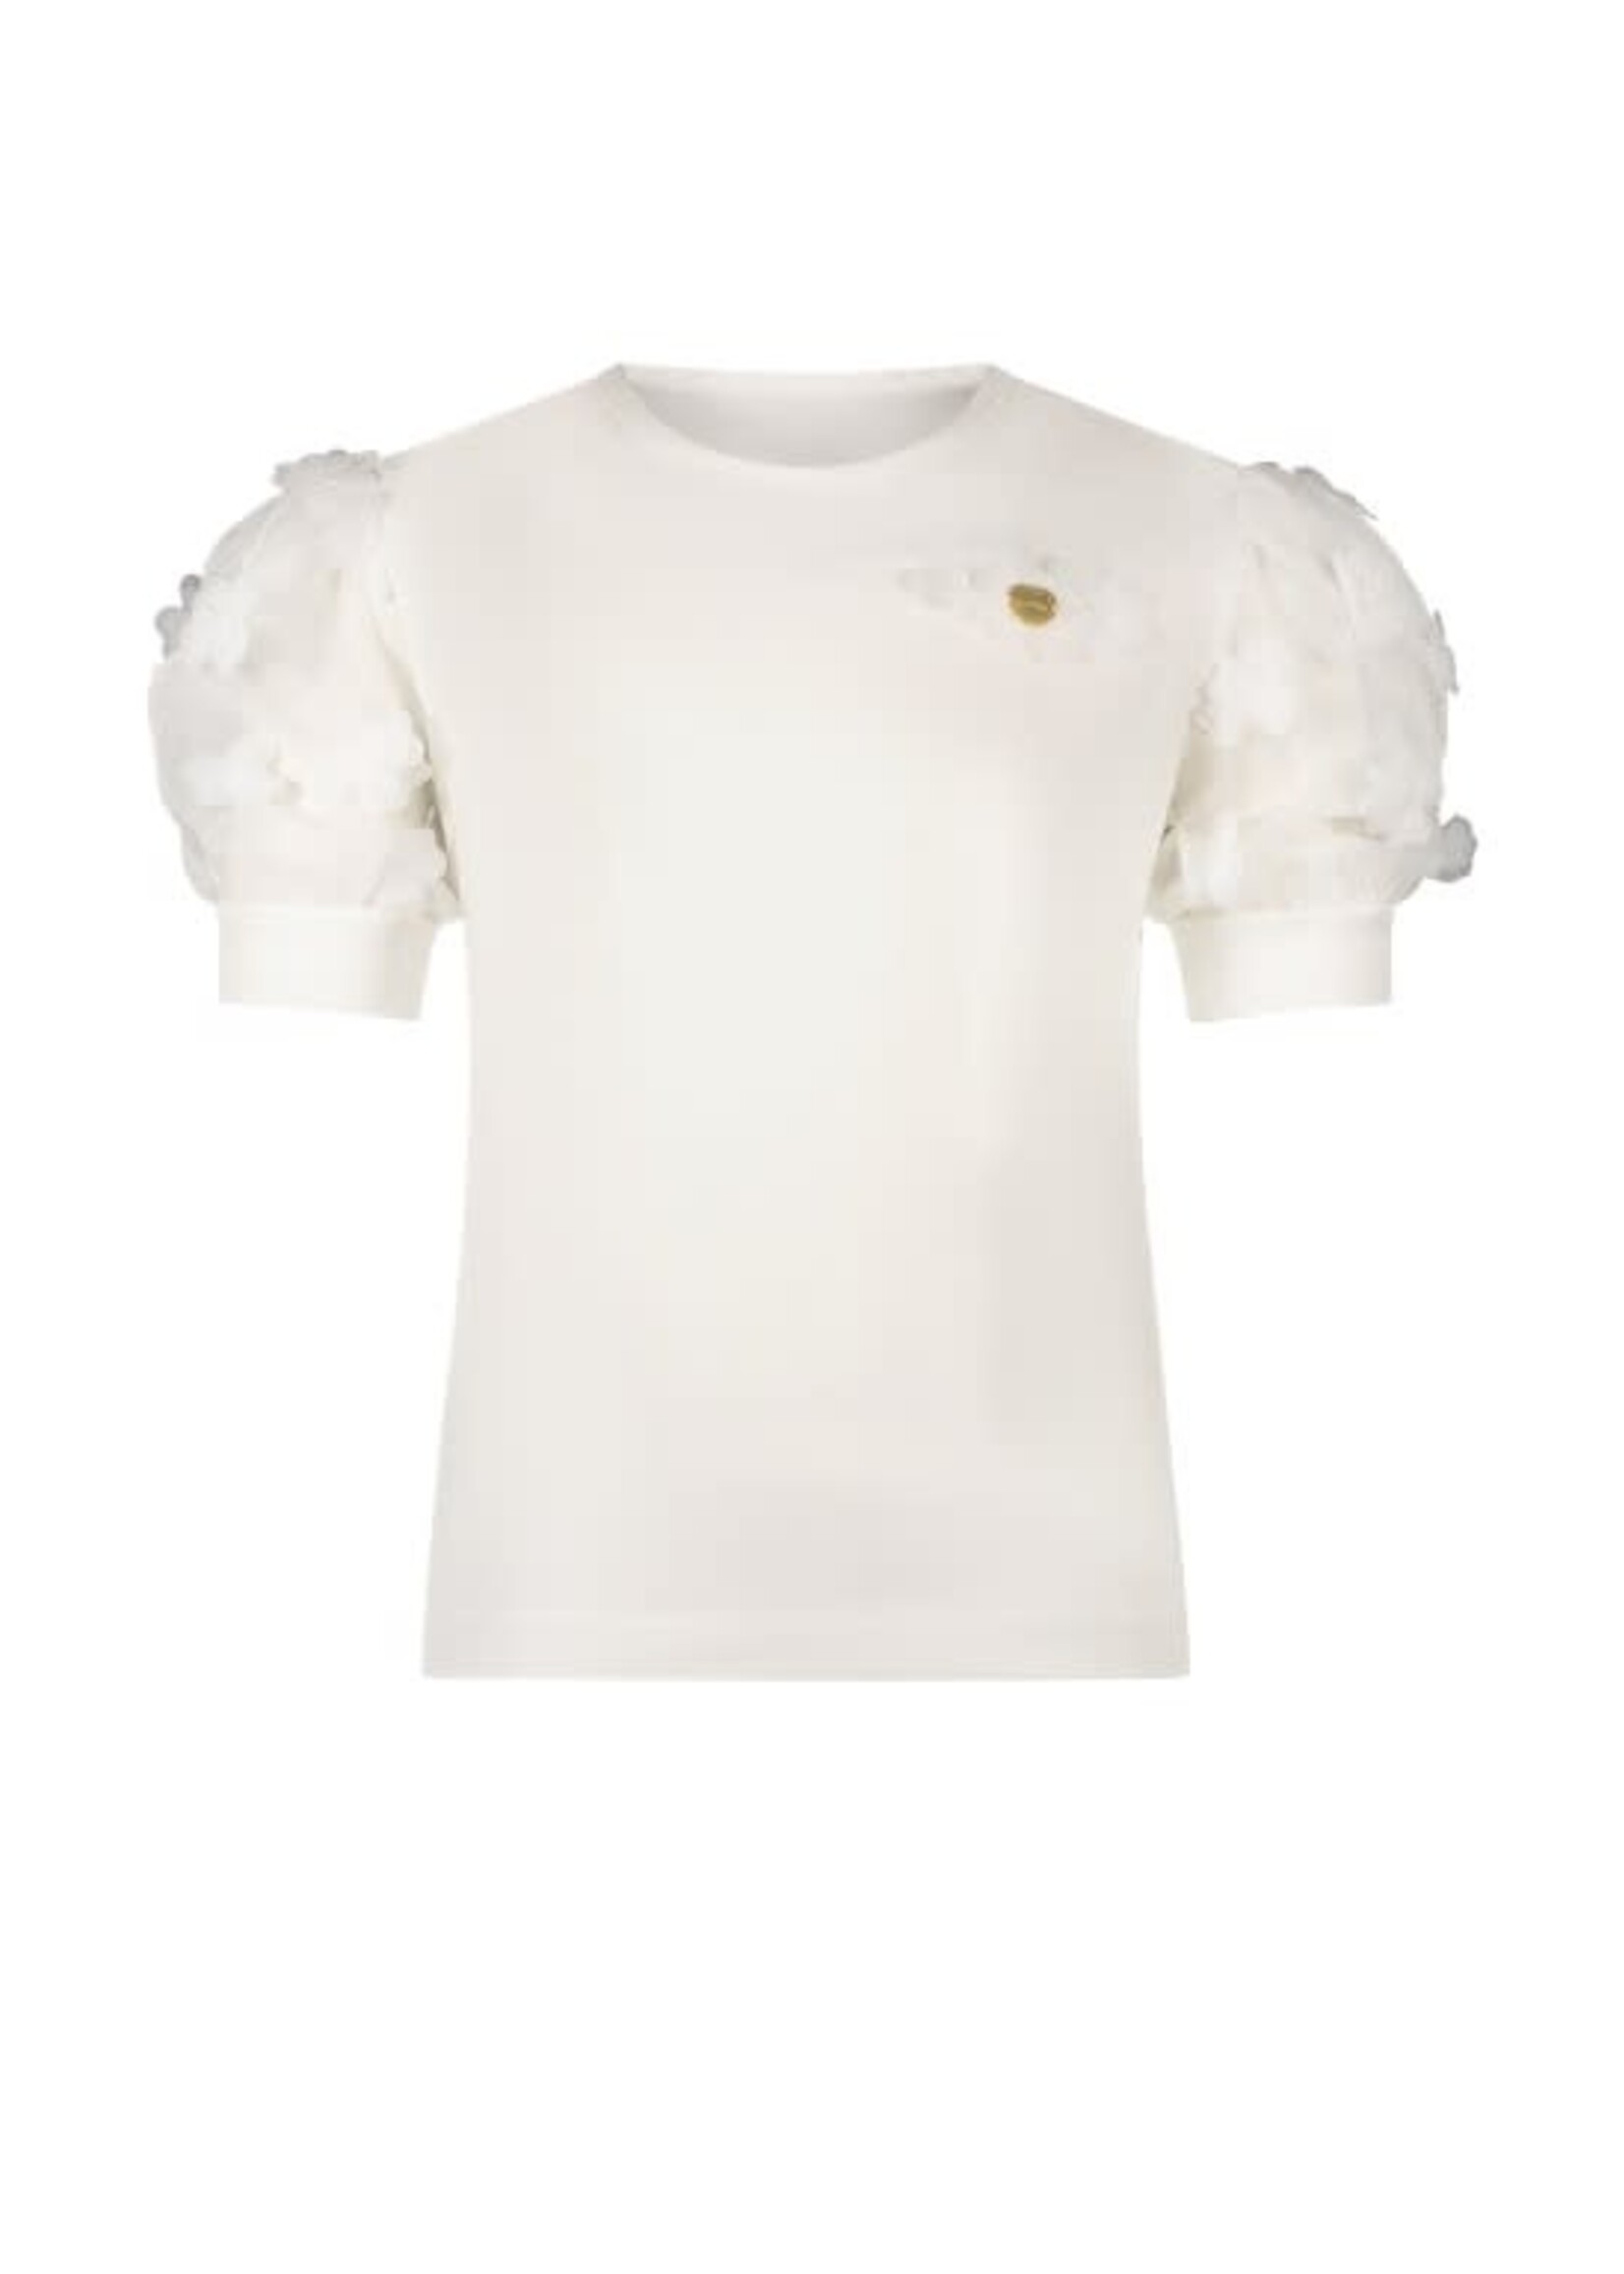 Le Chic Le Chic NOSHANY flower voile T-shirt C312-5400 Off White